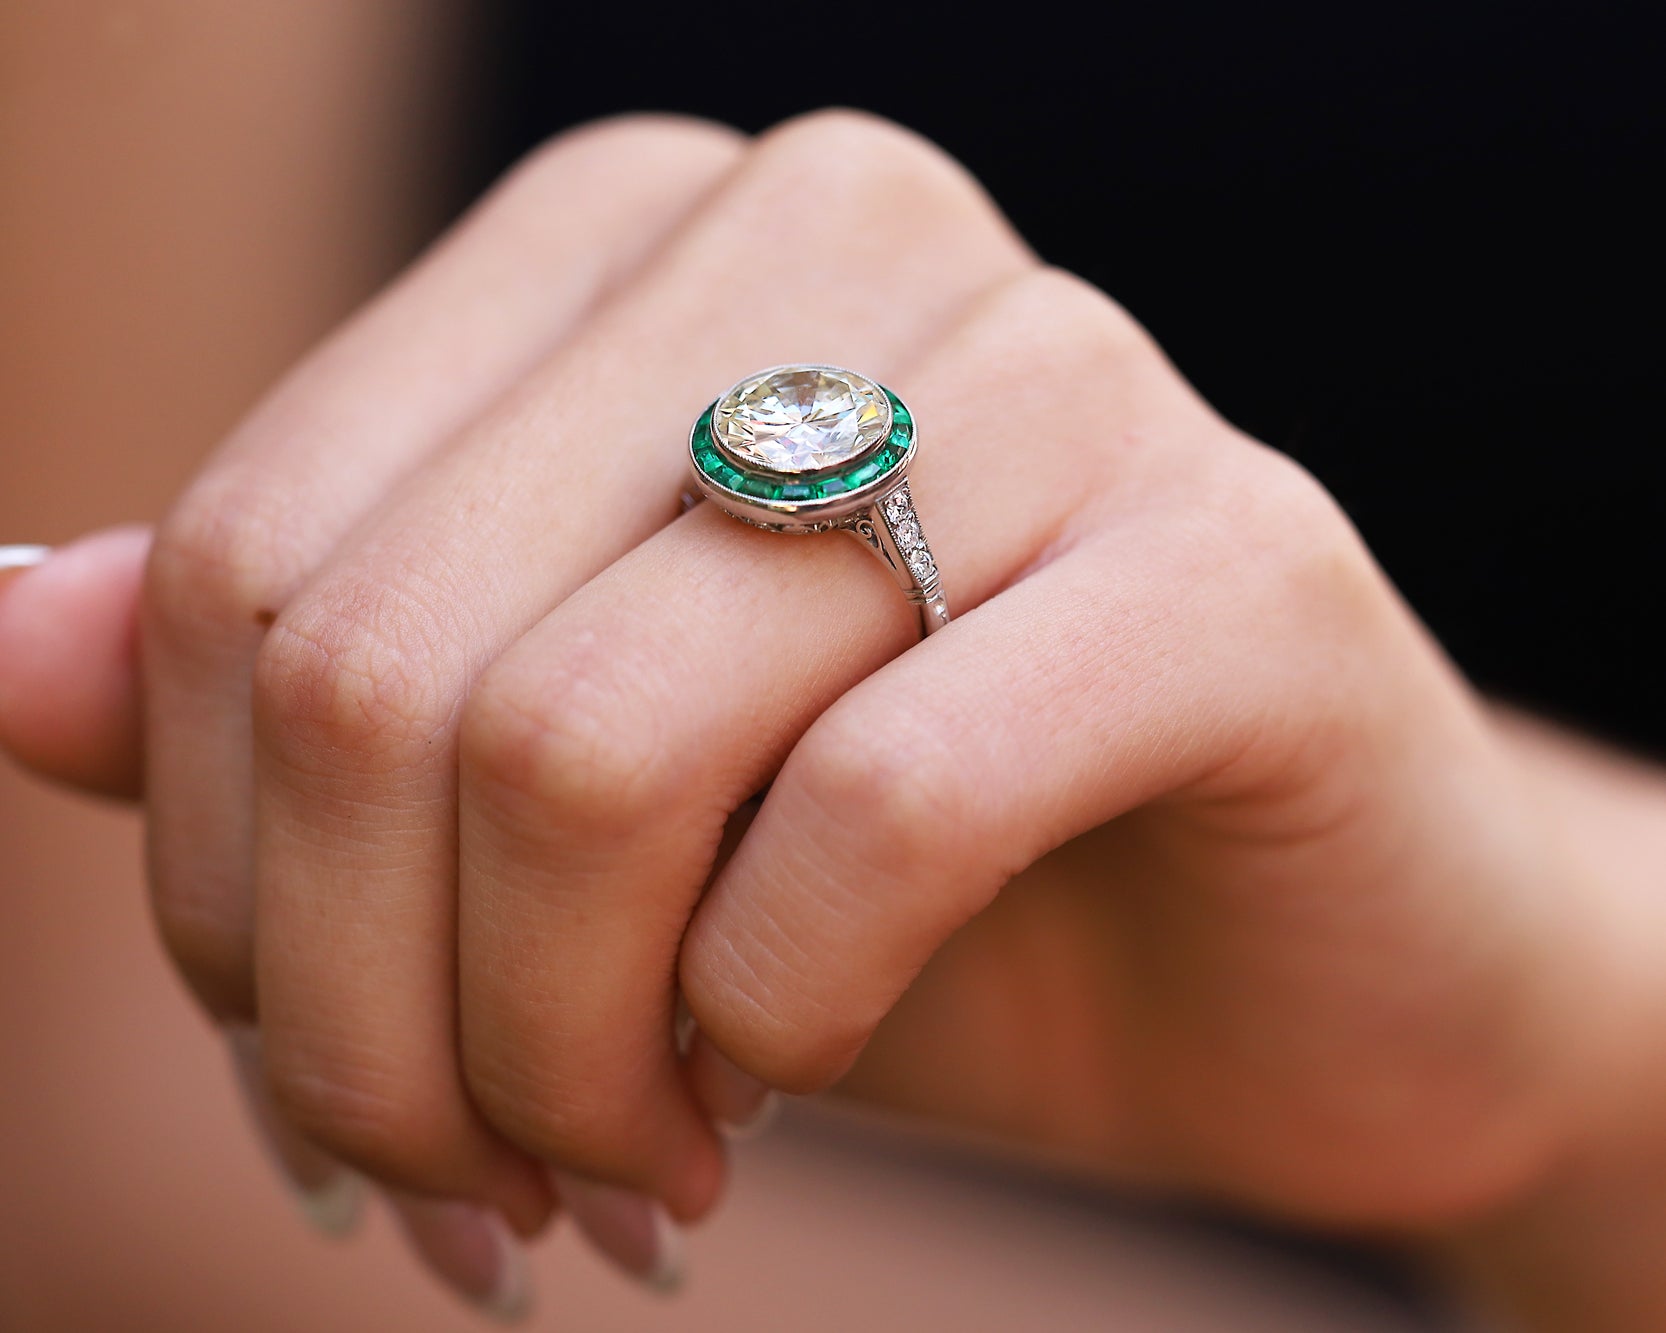 Bespoke Art Deco Revival 4.10 Carat Diamond & Emerald Platinum Engagement Ring